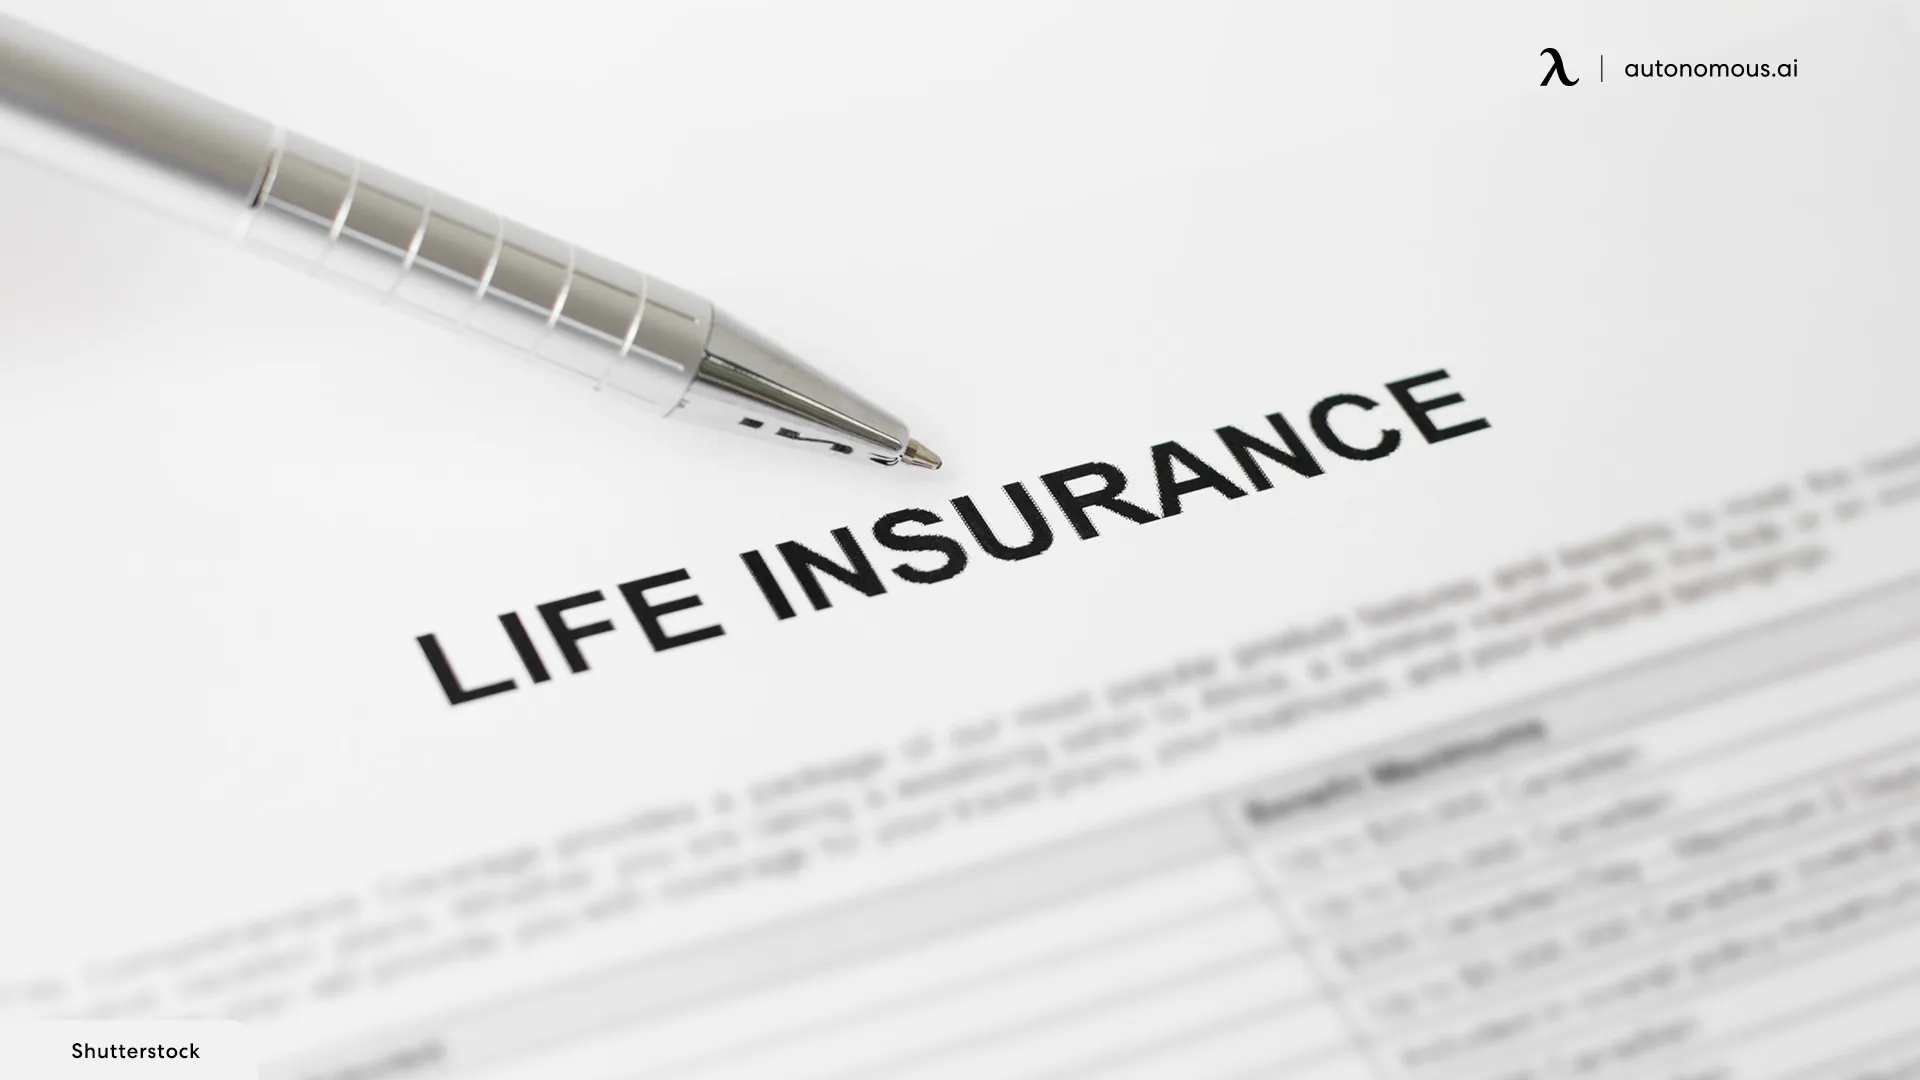 Nordstrom Has Basic Life Insurance